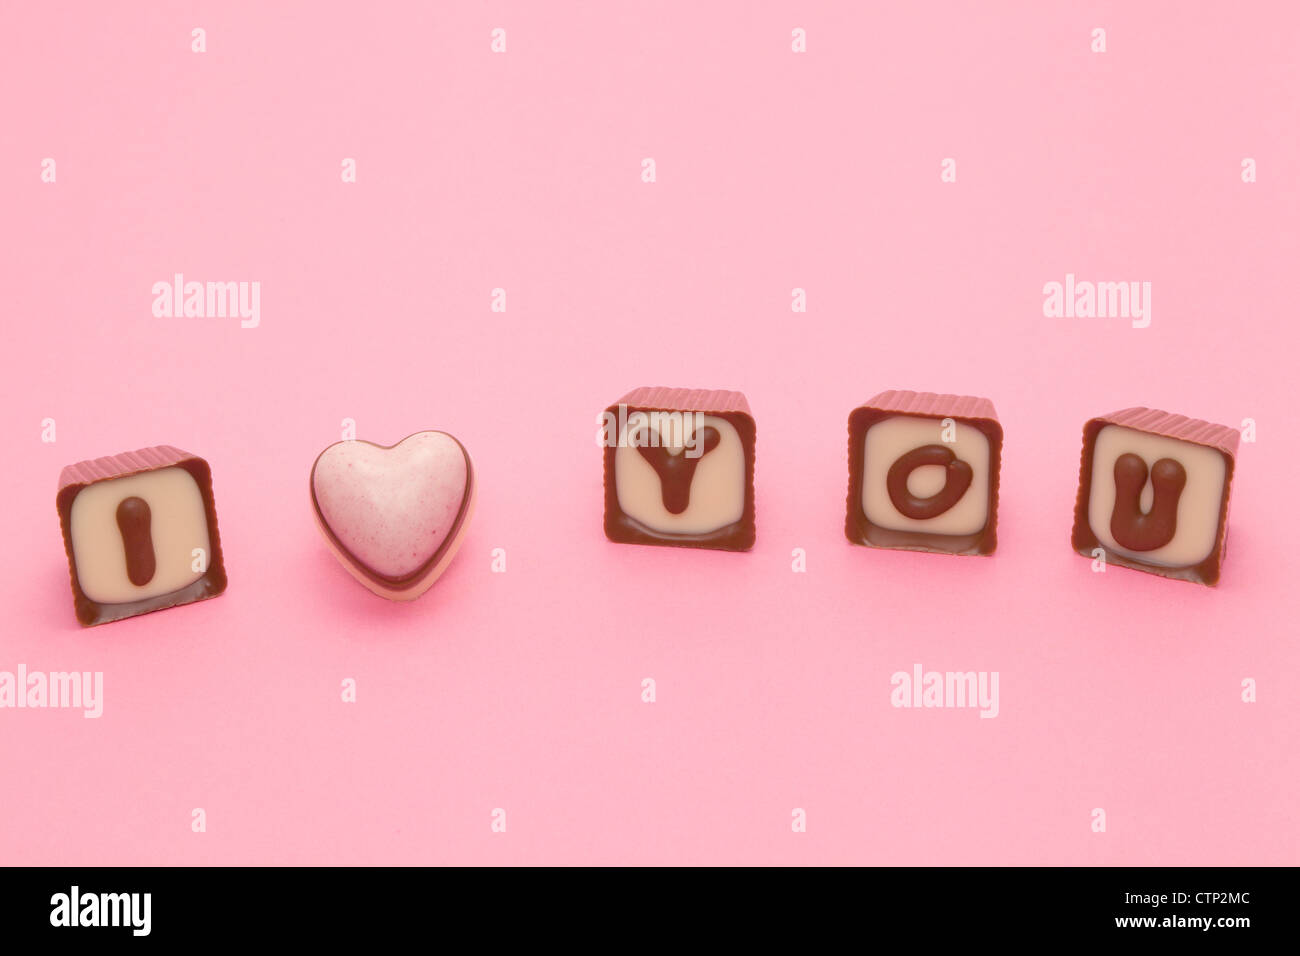 La parola "ti amo" digitato nel cioccolato al latte lettere - studio shot Foto Stock